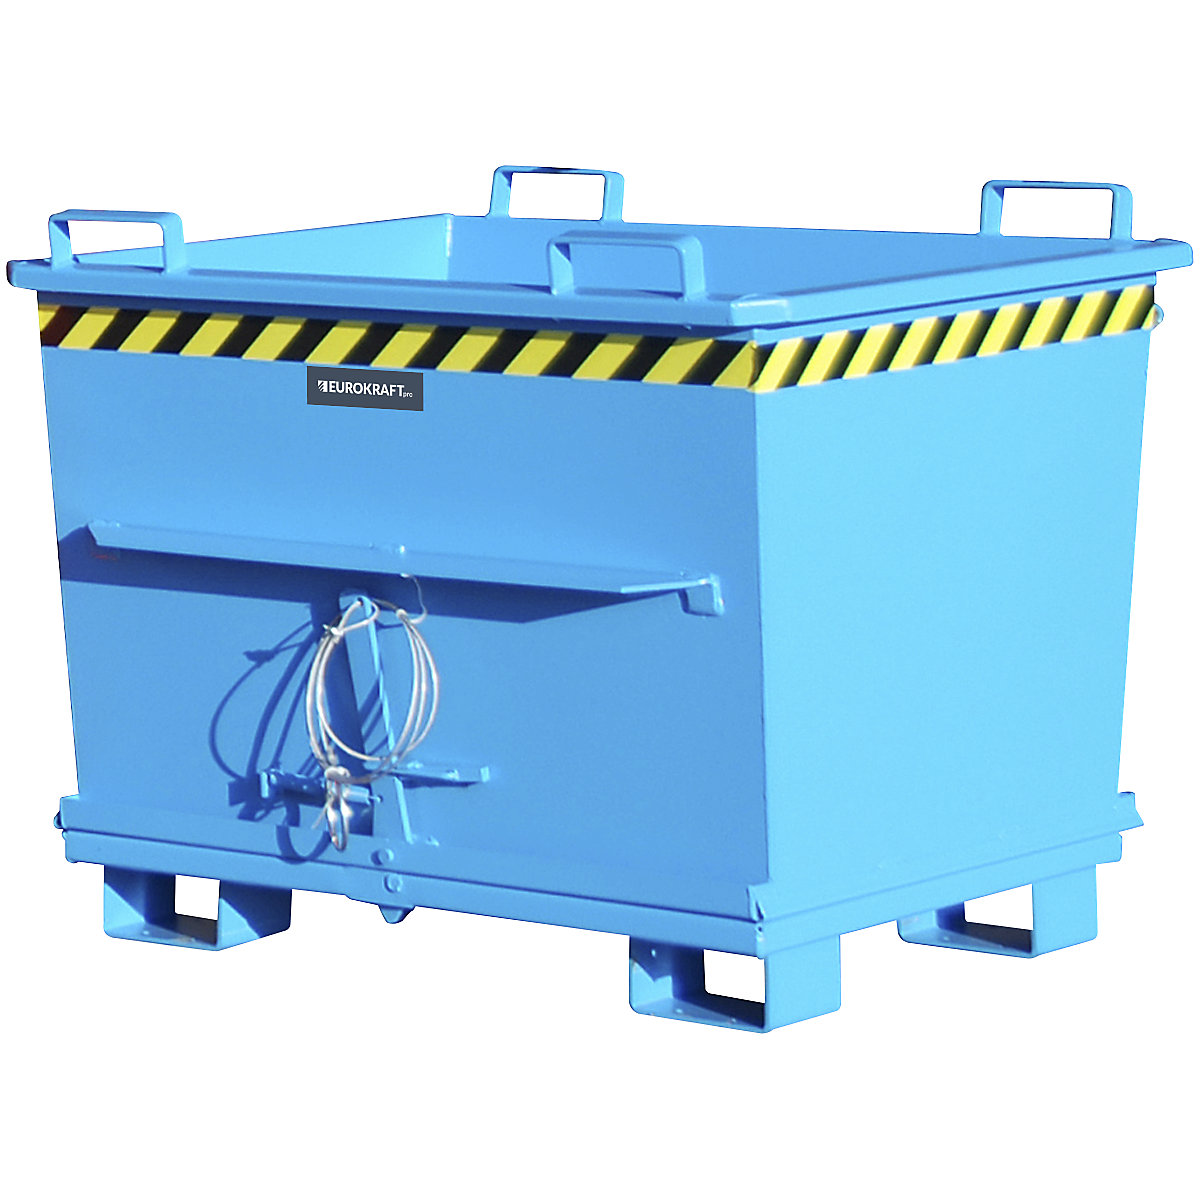 Kónický kontajner s výklopným dnom – eurokraft pro, objem 0,7 m³, nosnosť 1500 kg, modrá RAL 5012-14